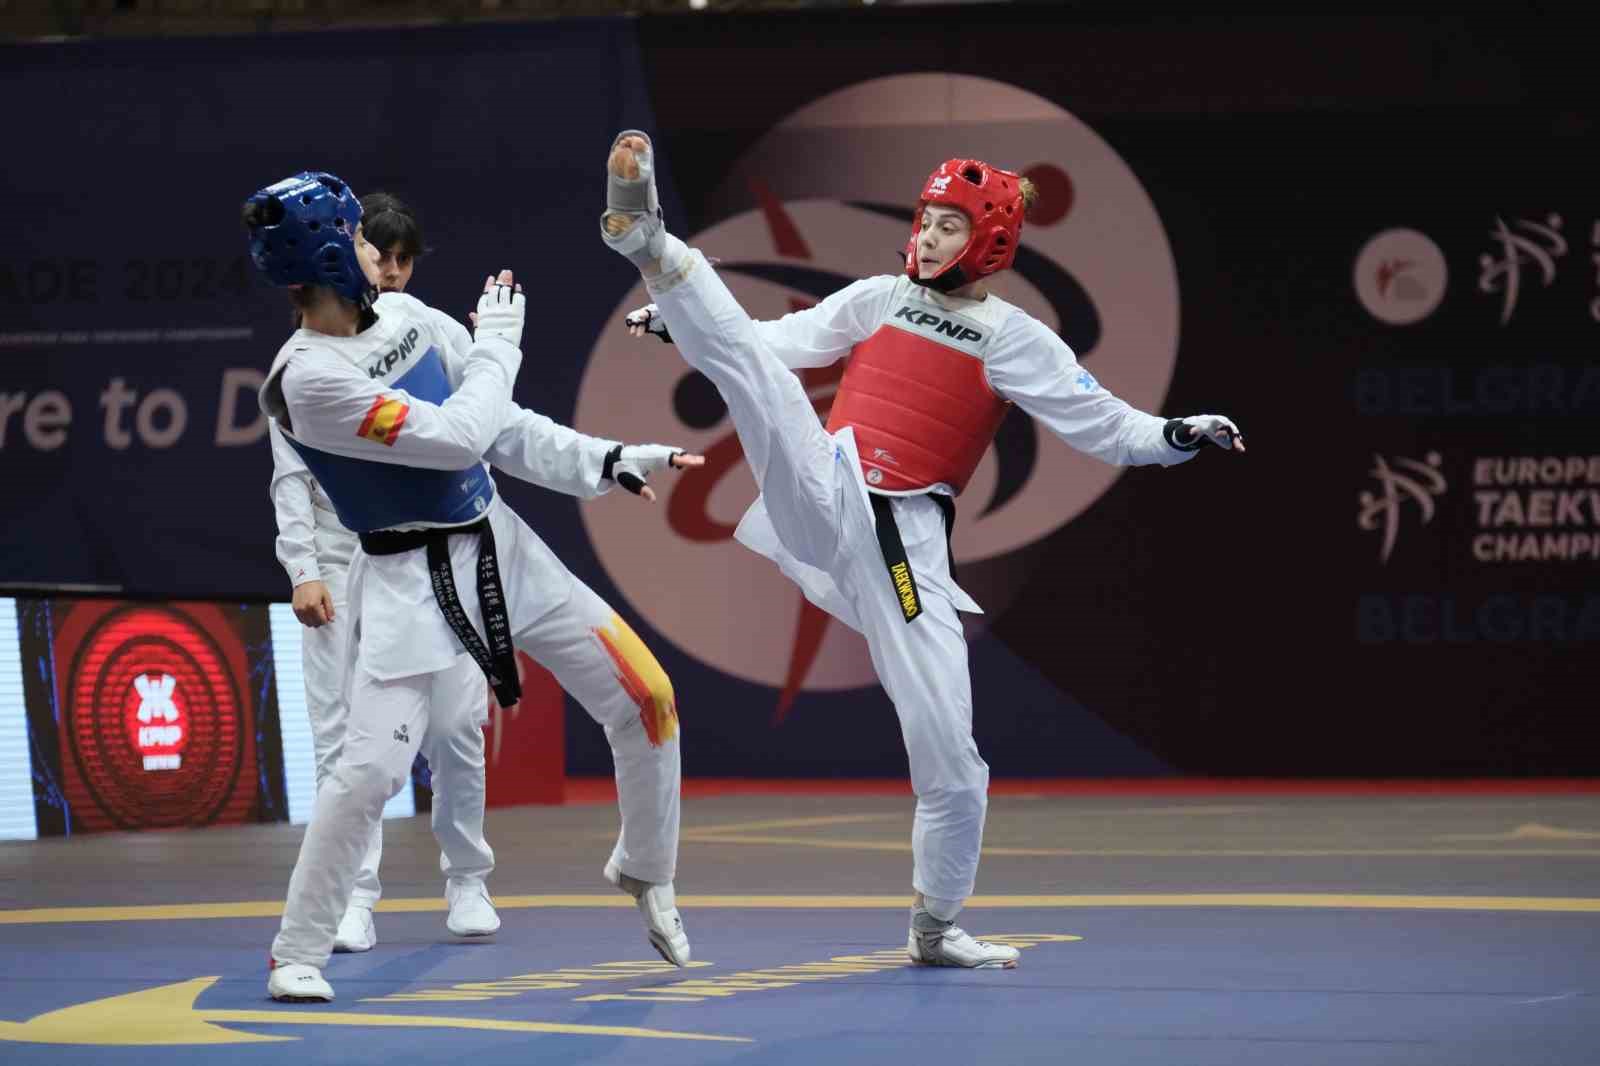 mili taekwondoculardan 6 madalya 8 mI21Me3d